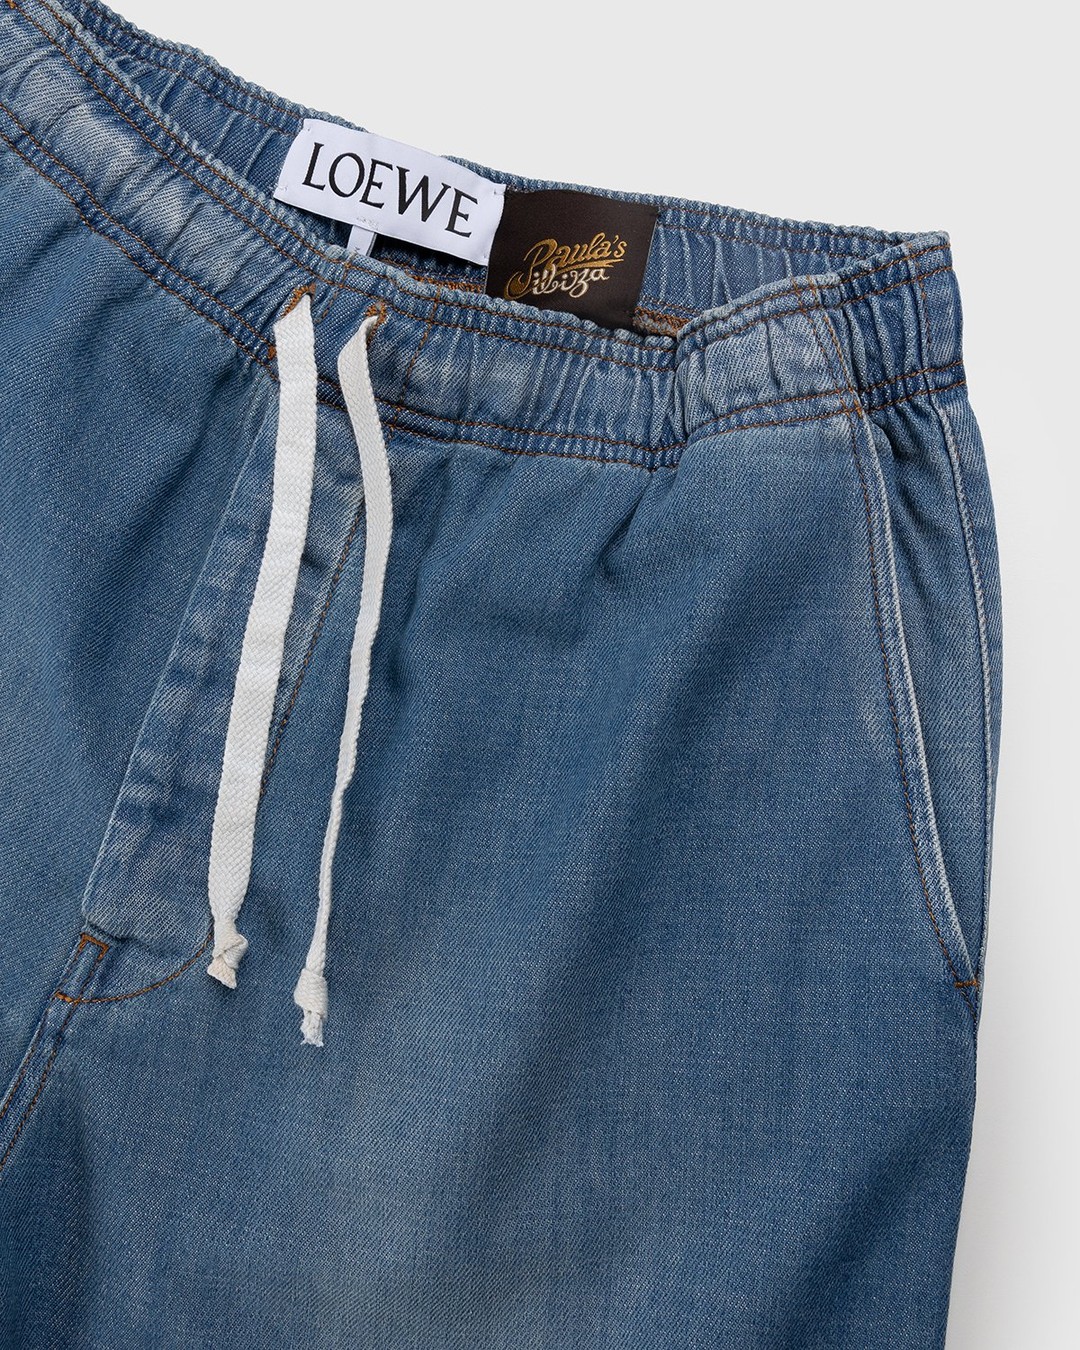 Loewe – Paula's Ibiza Drawstring Denim Shorts Blue - Denim Shorts - Blue - Image 4